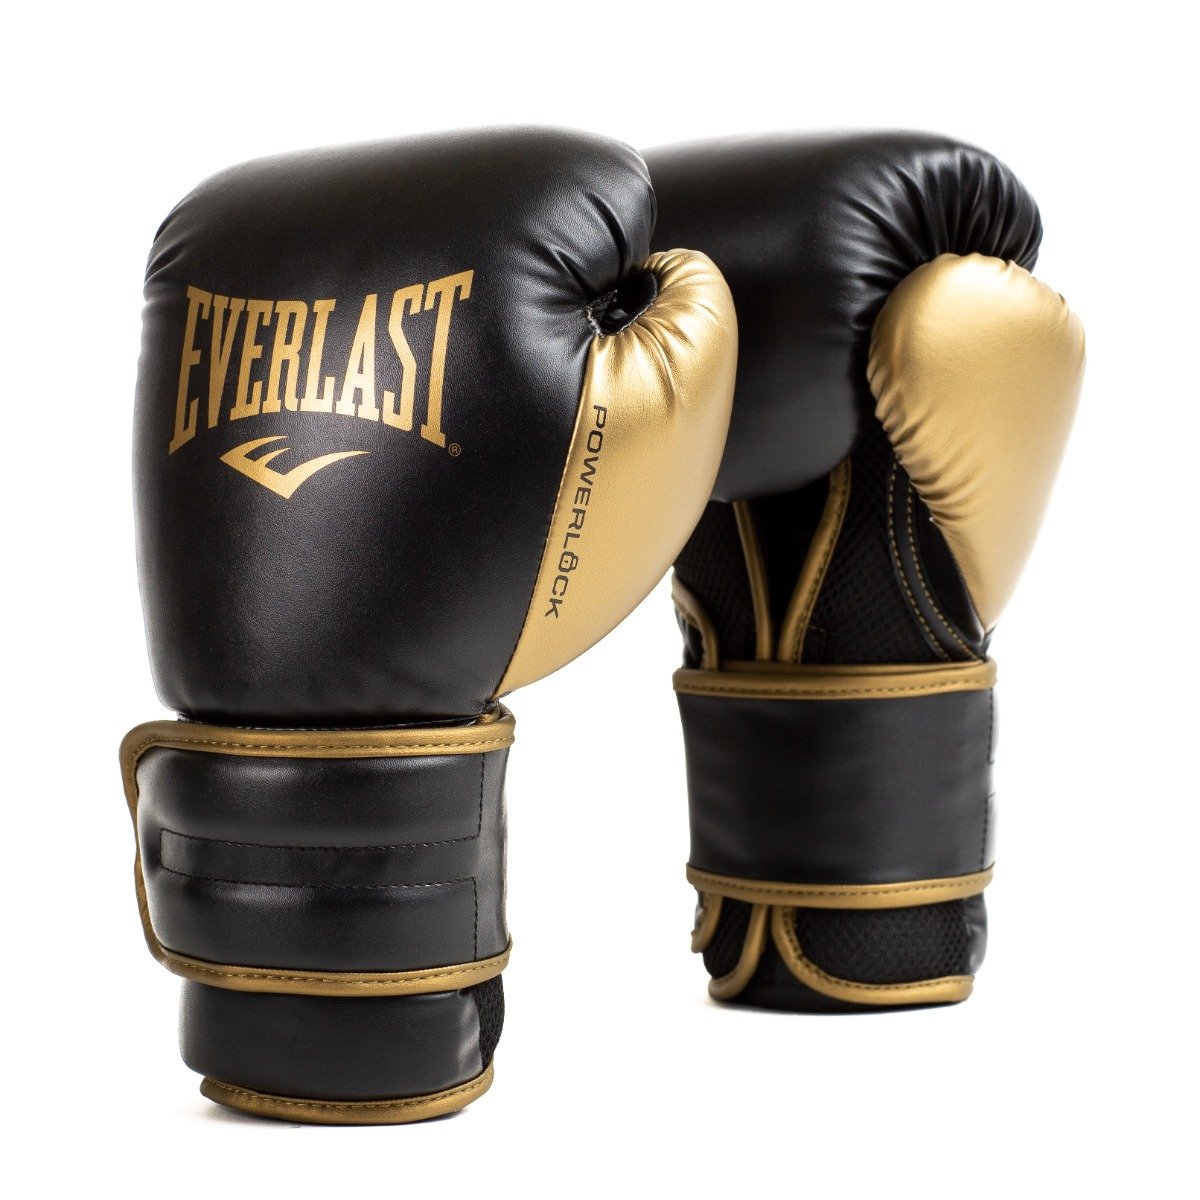 Powerlock 2R Training Gloves - Everlast